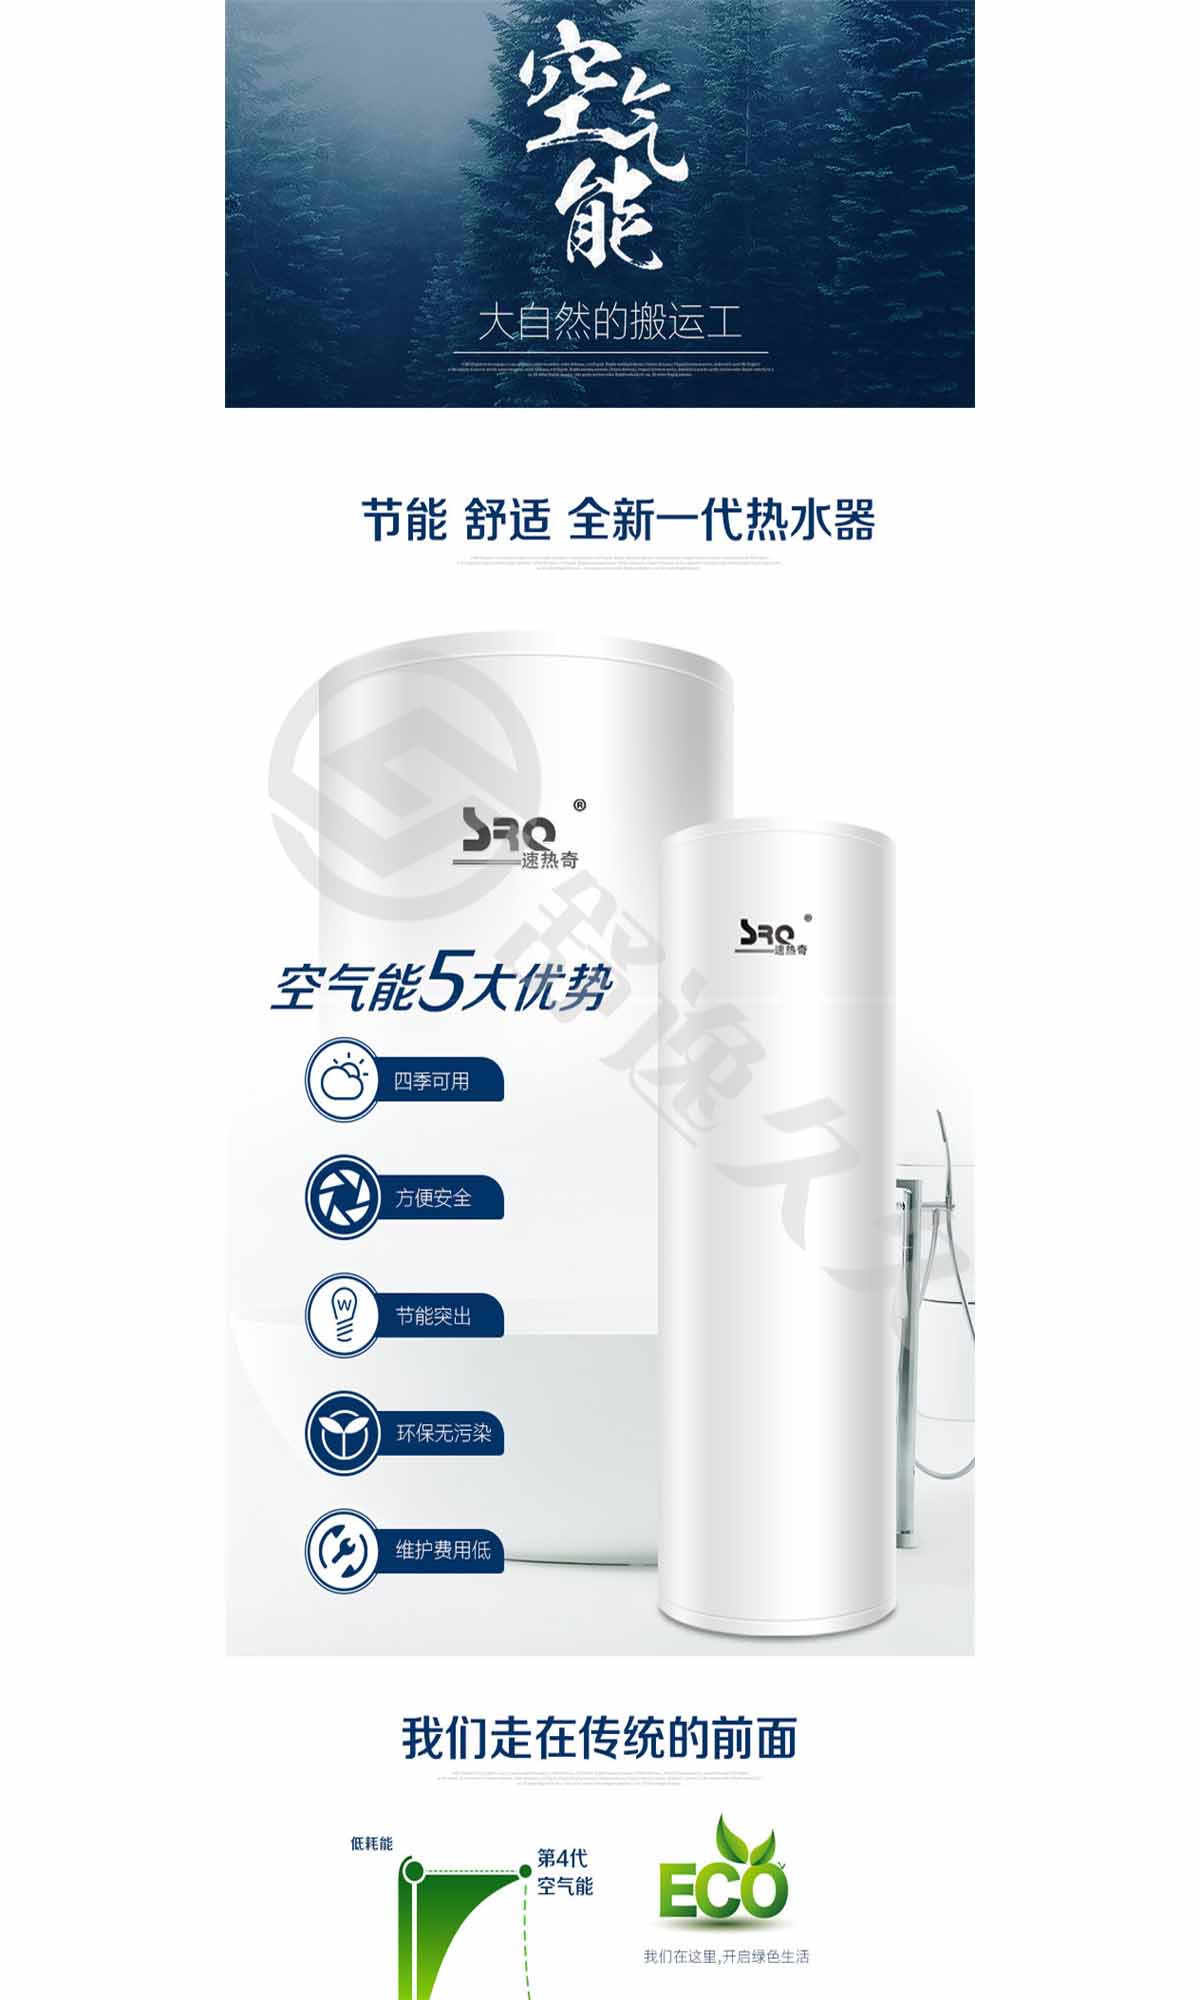 SRQ/速热奇 热水器SRQ-8066 空气能热水器320L WIFI远程操作 节能环保中央供水热泵空气能热水器